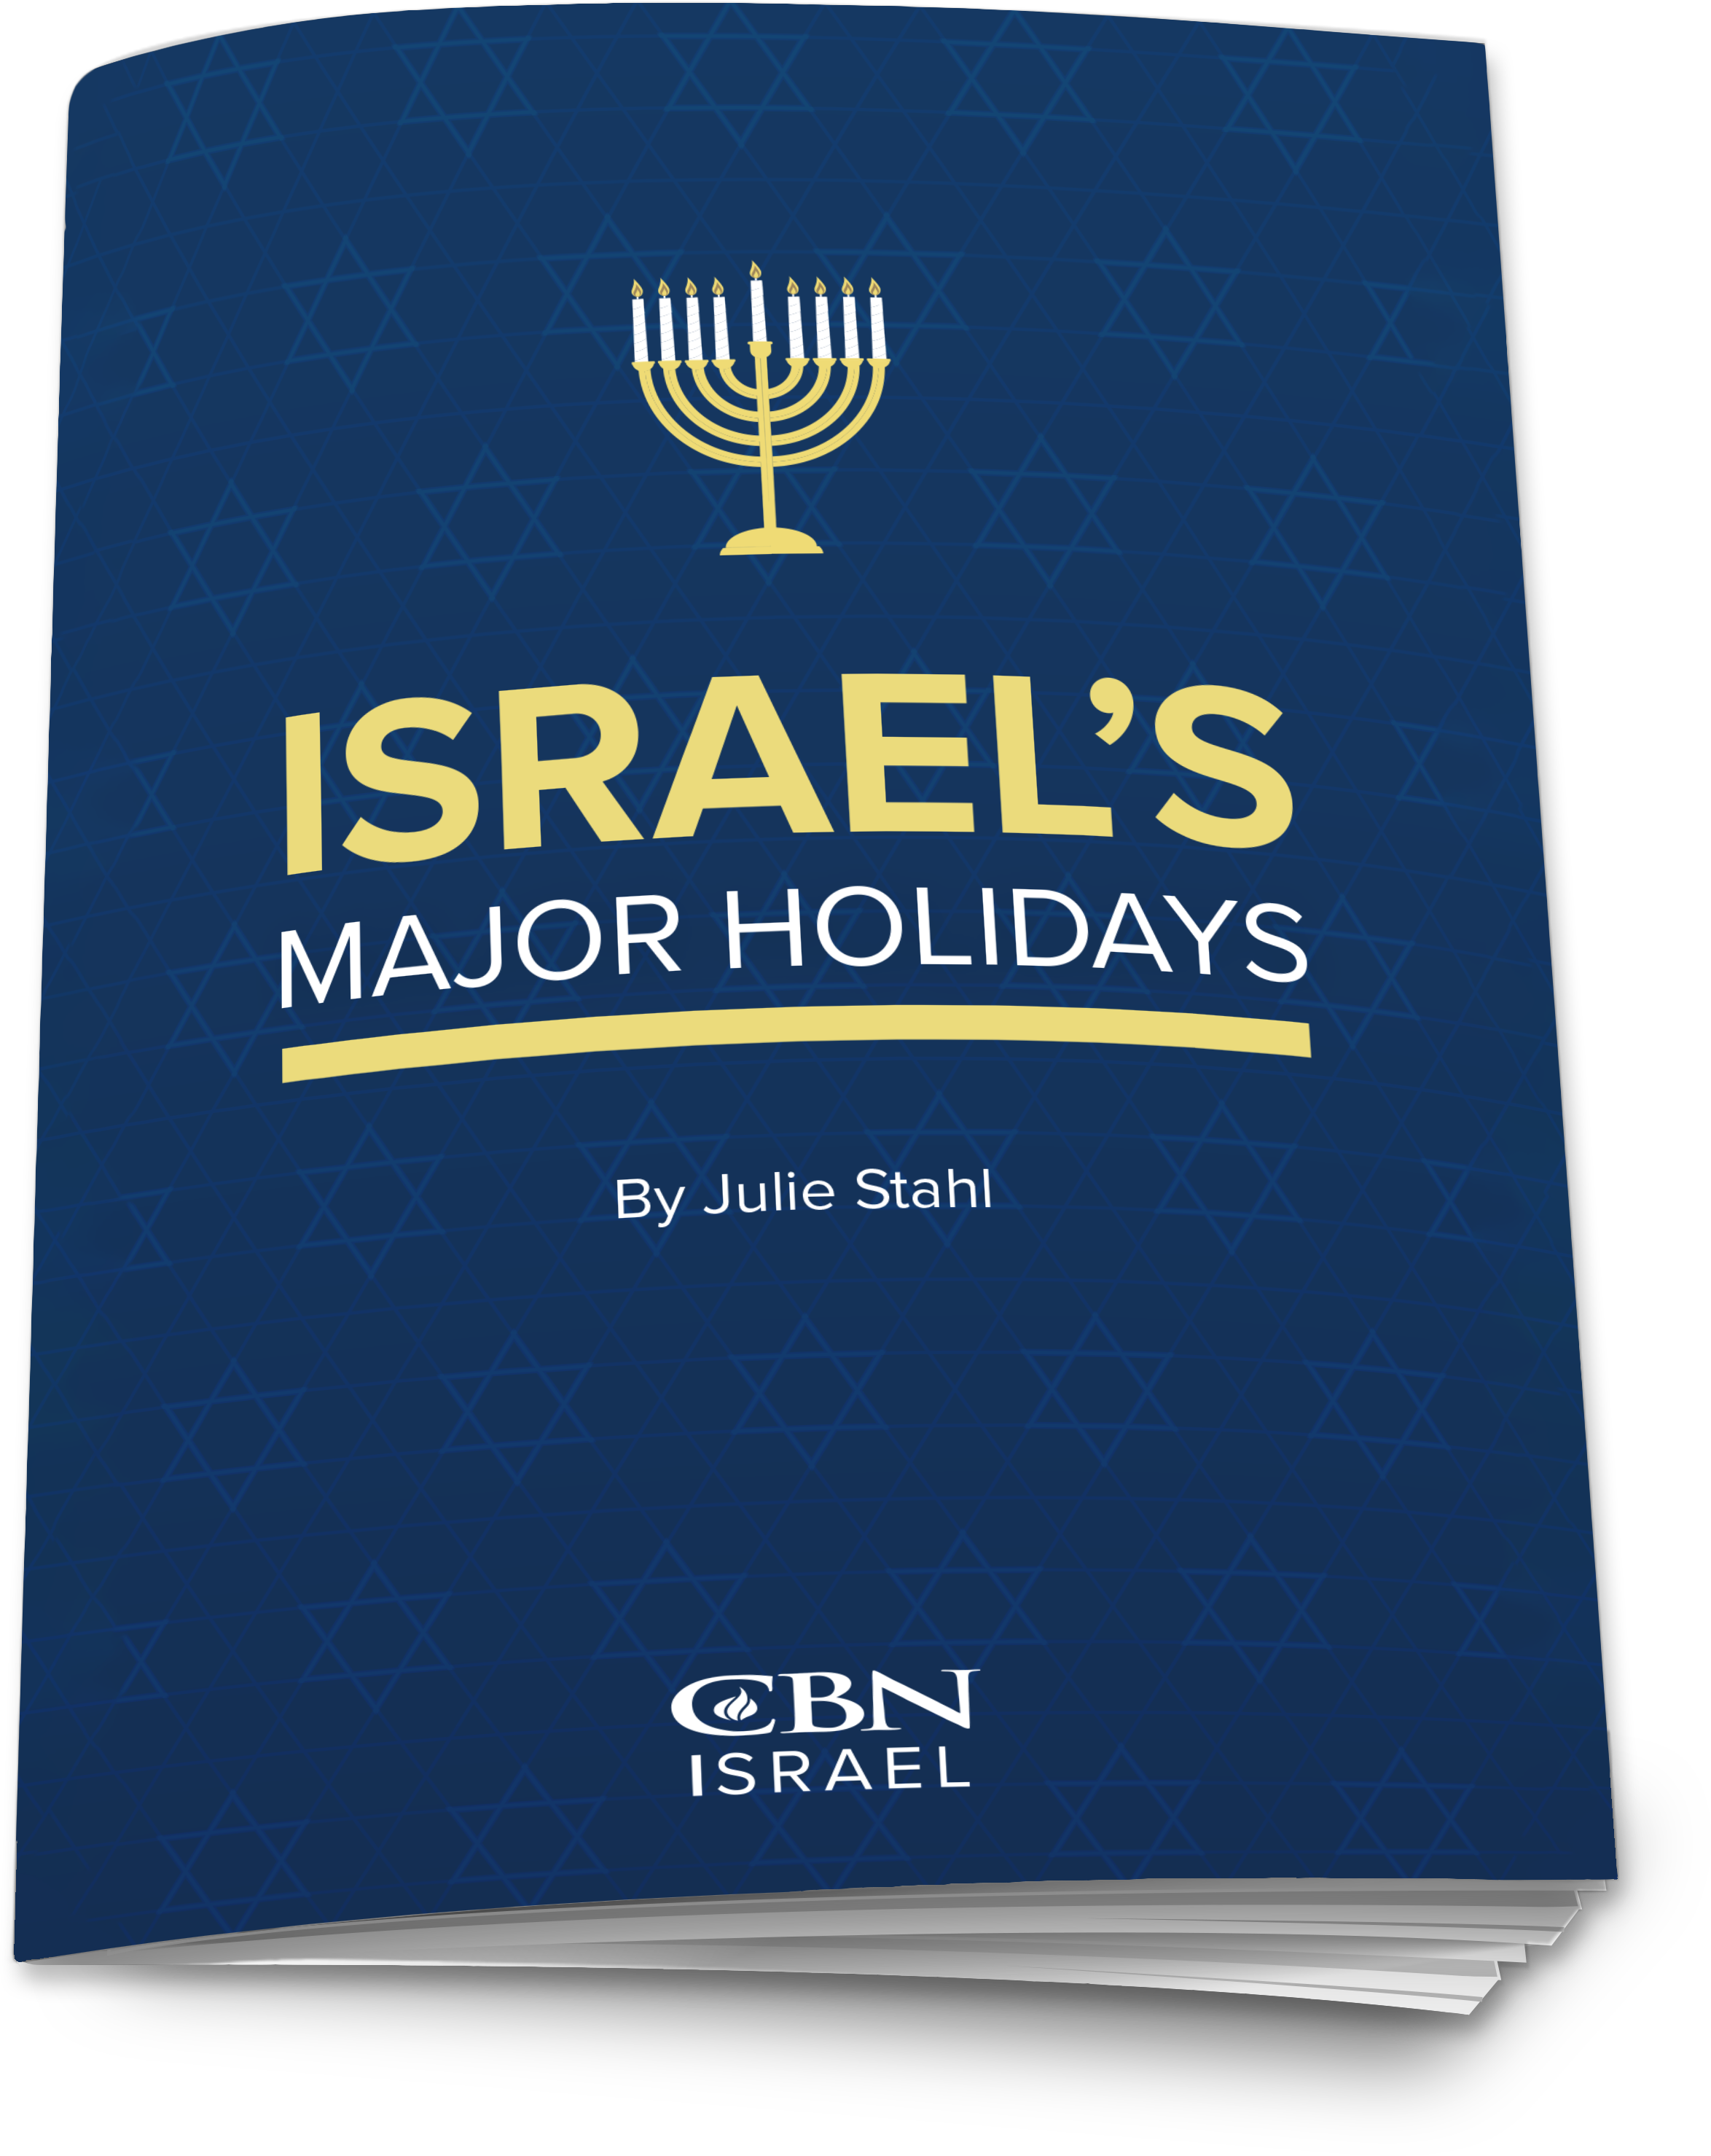 Israel's Major Holidays Free Holiday Guide